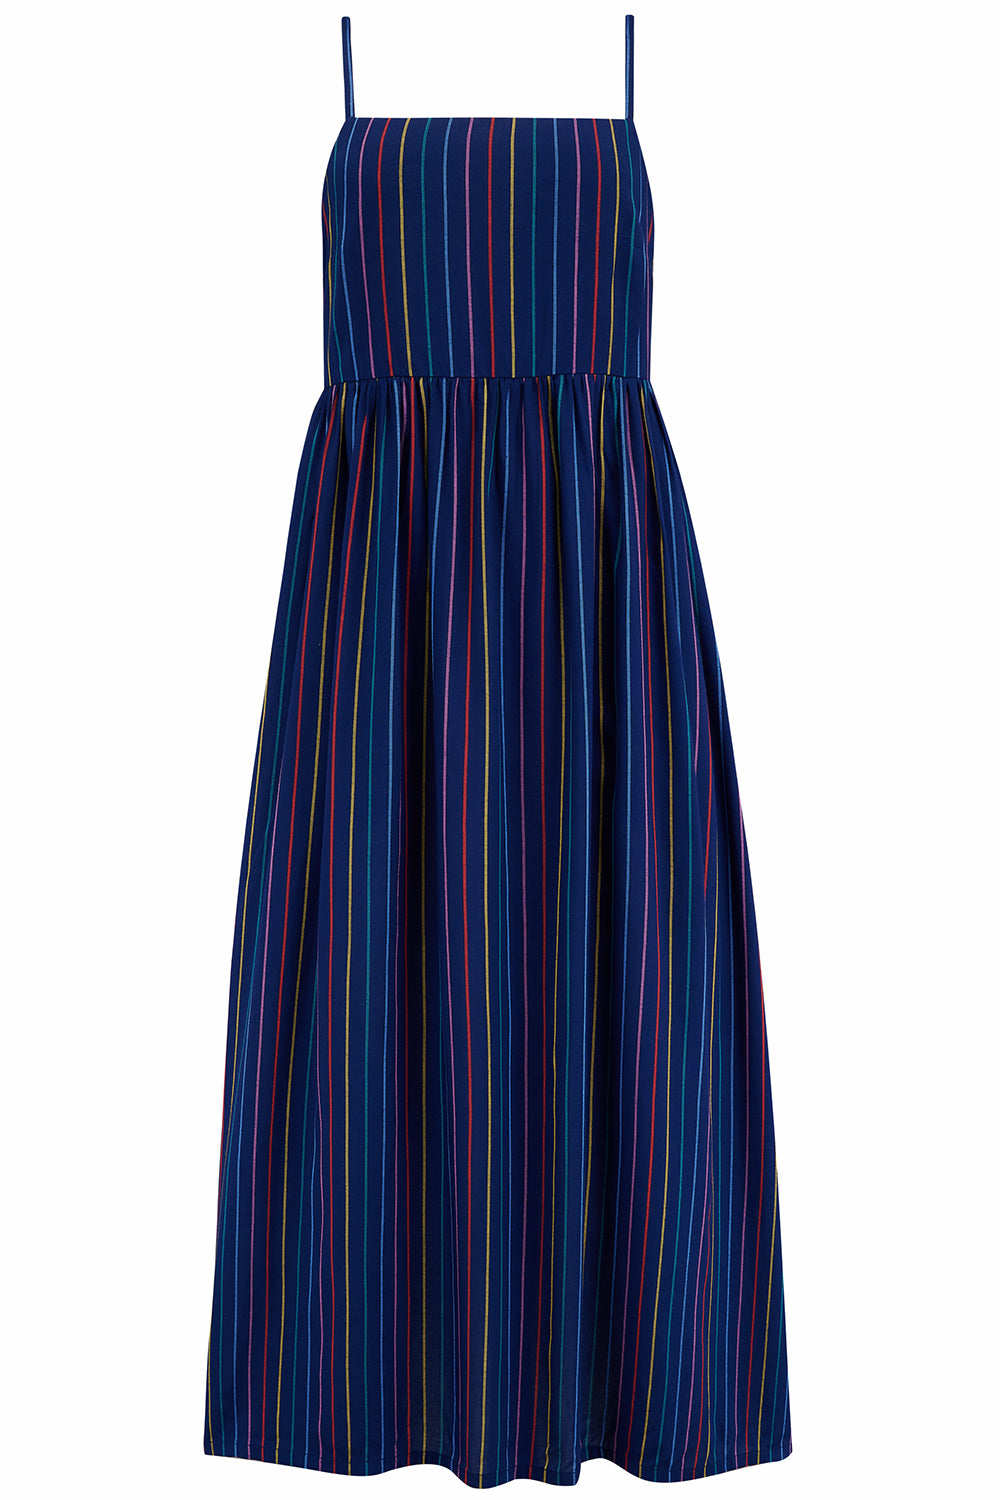 Sugarhill Brighton Women's Blue Gracie Midi Sundress Navy, Thin Rainbow Stripe